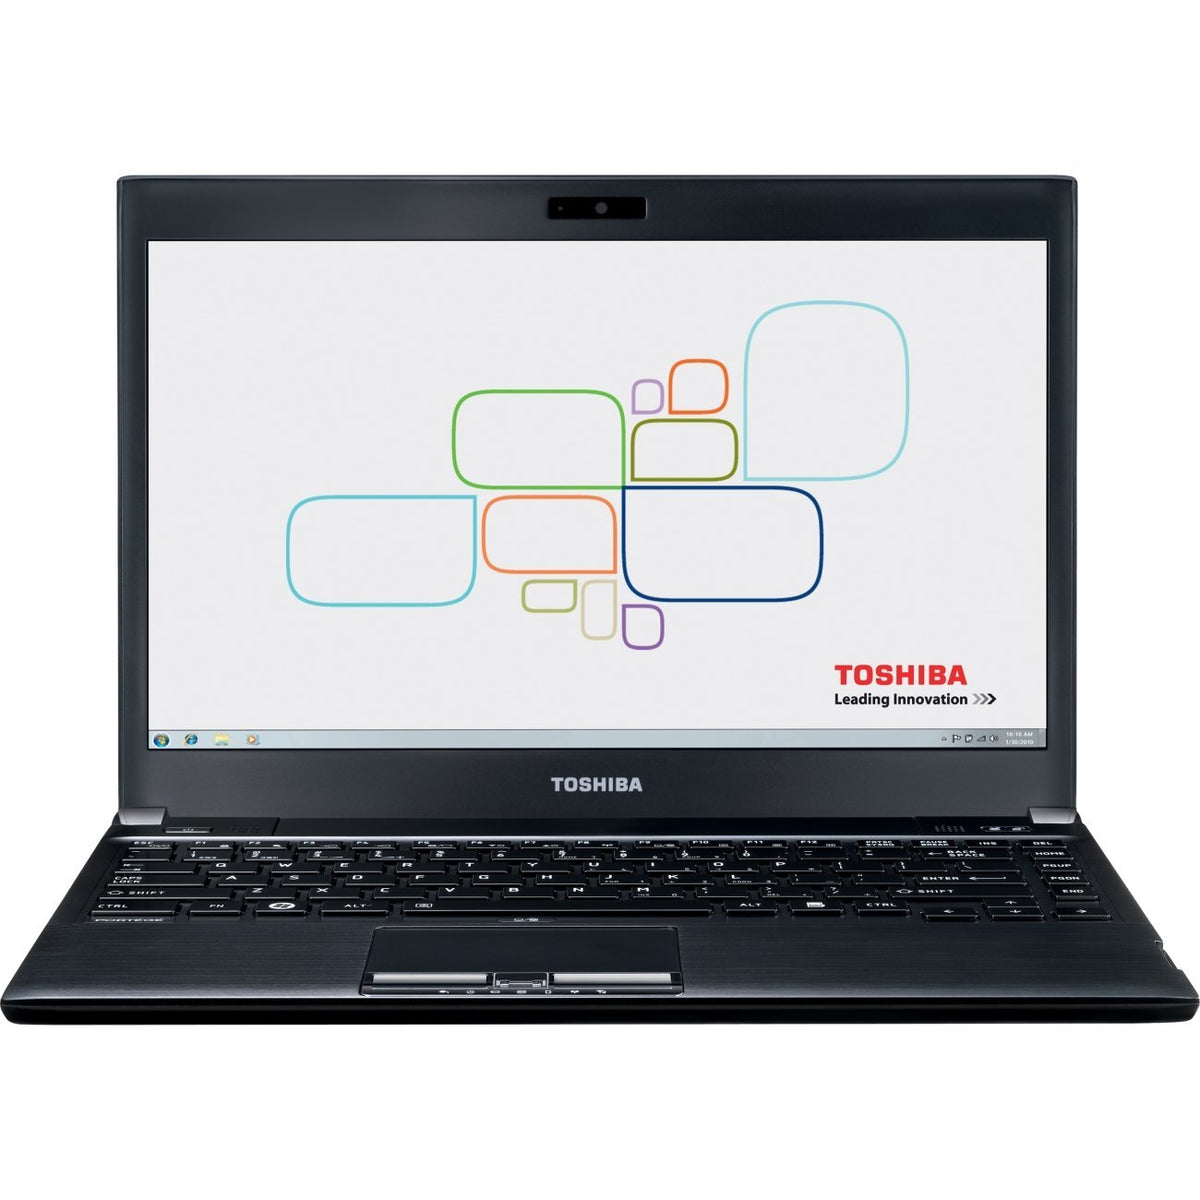 Toshiba Portege R930 13.3" Laptop i5-3340M 256GB 8GB RAM - Very Good Condition